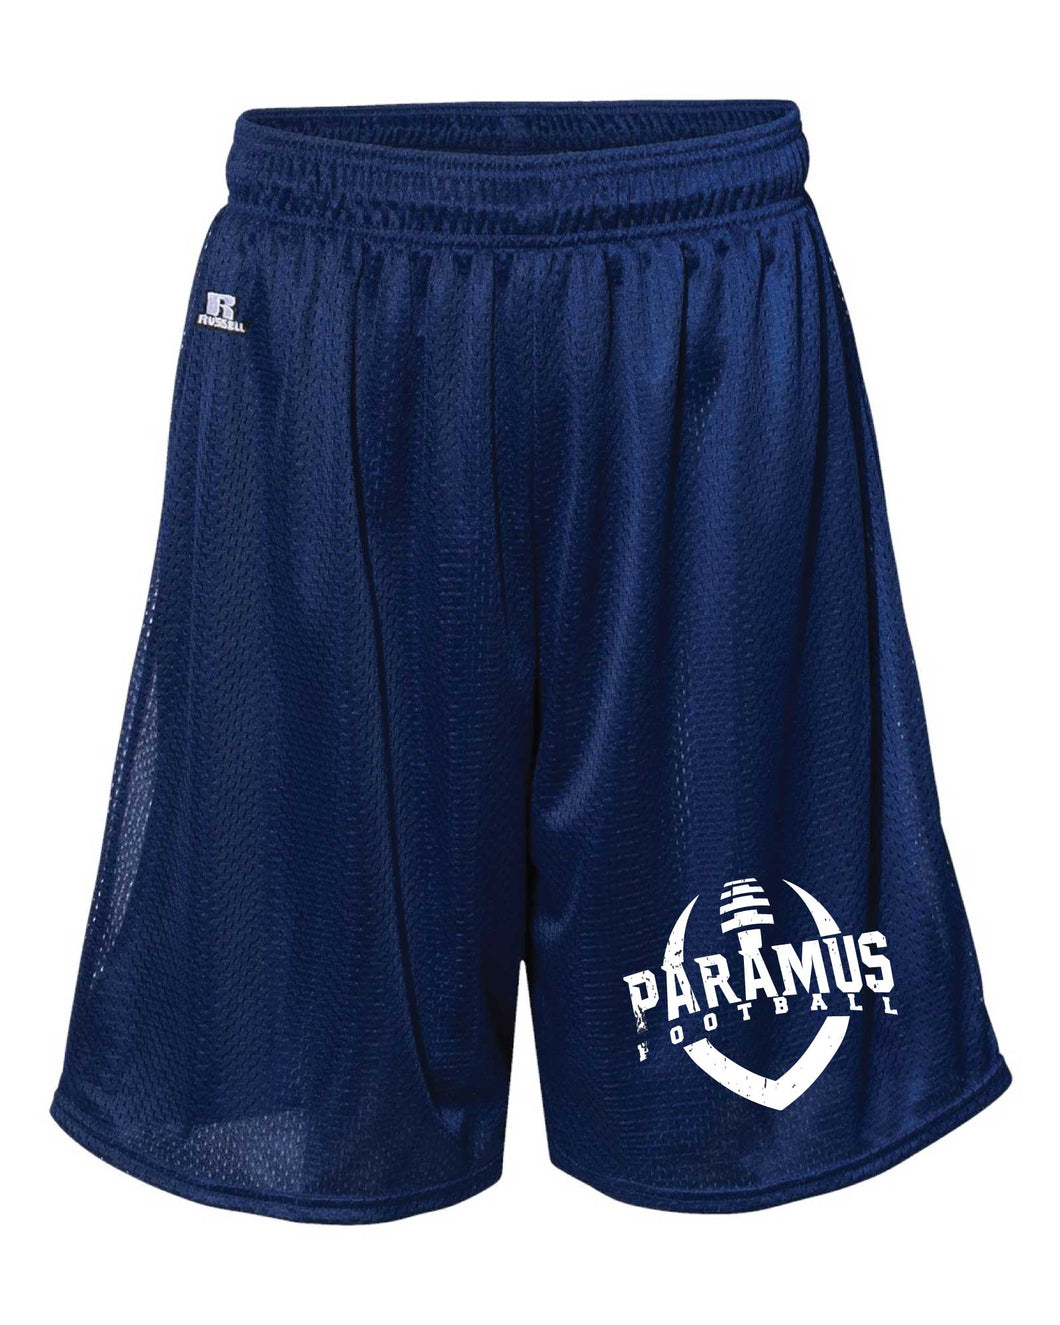 Paramus Football Russell Athletic Tech Shorts - Navy - 5KounT